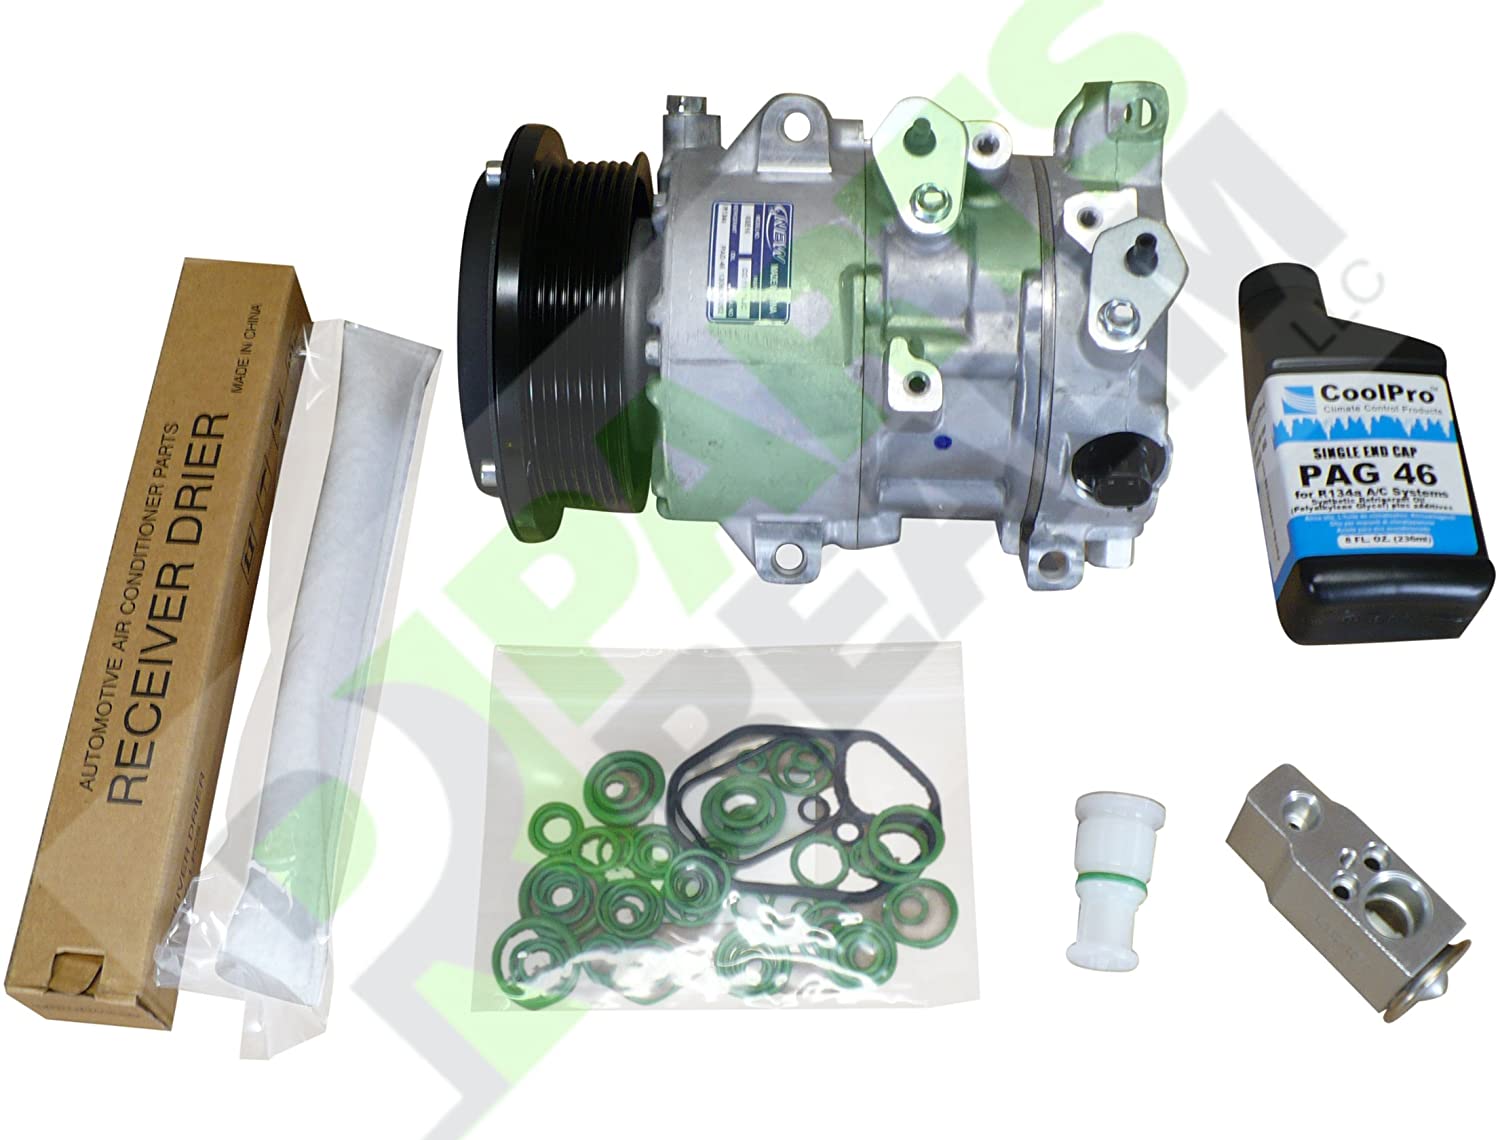 Parts Realm CO-0384AK Complete A/C AC Compressor Replacement Kit